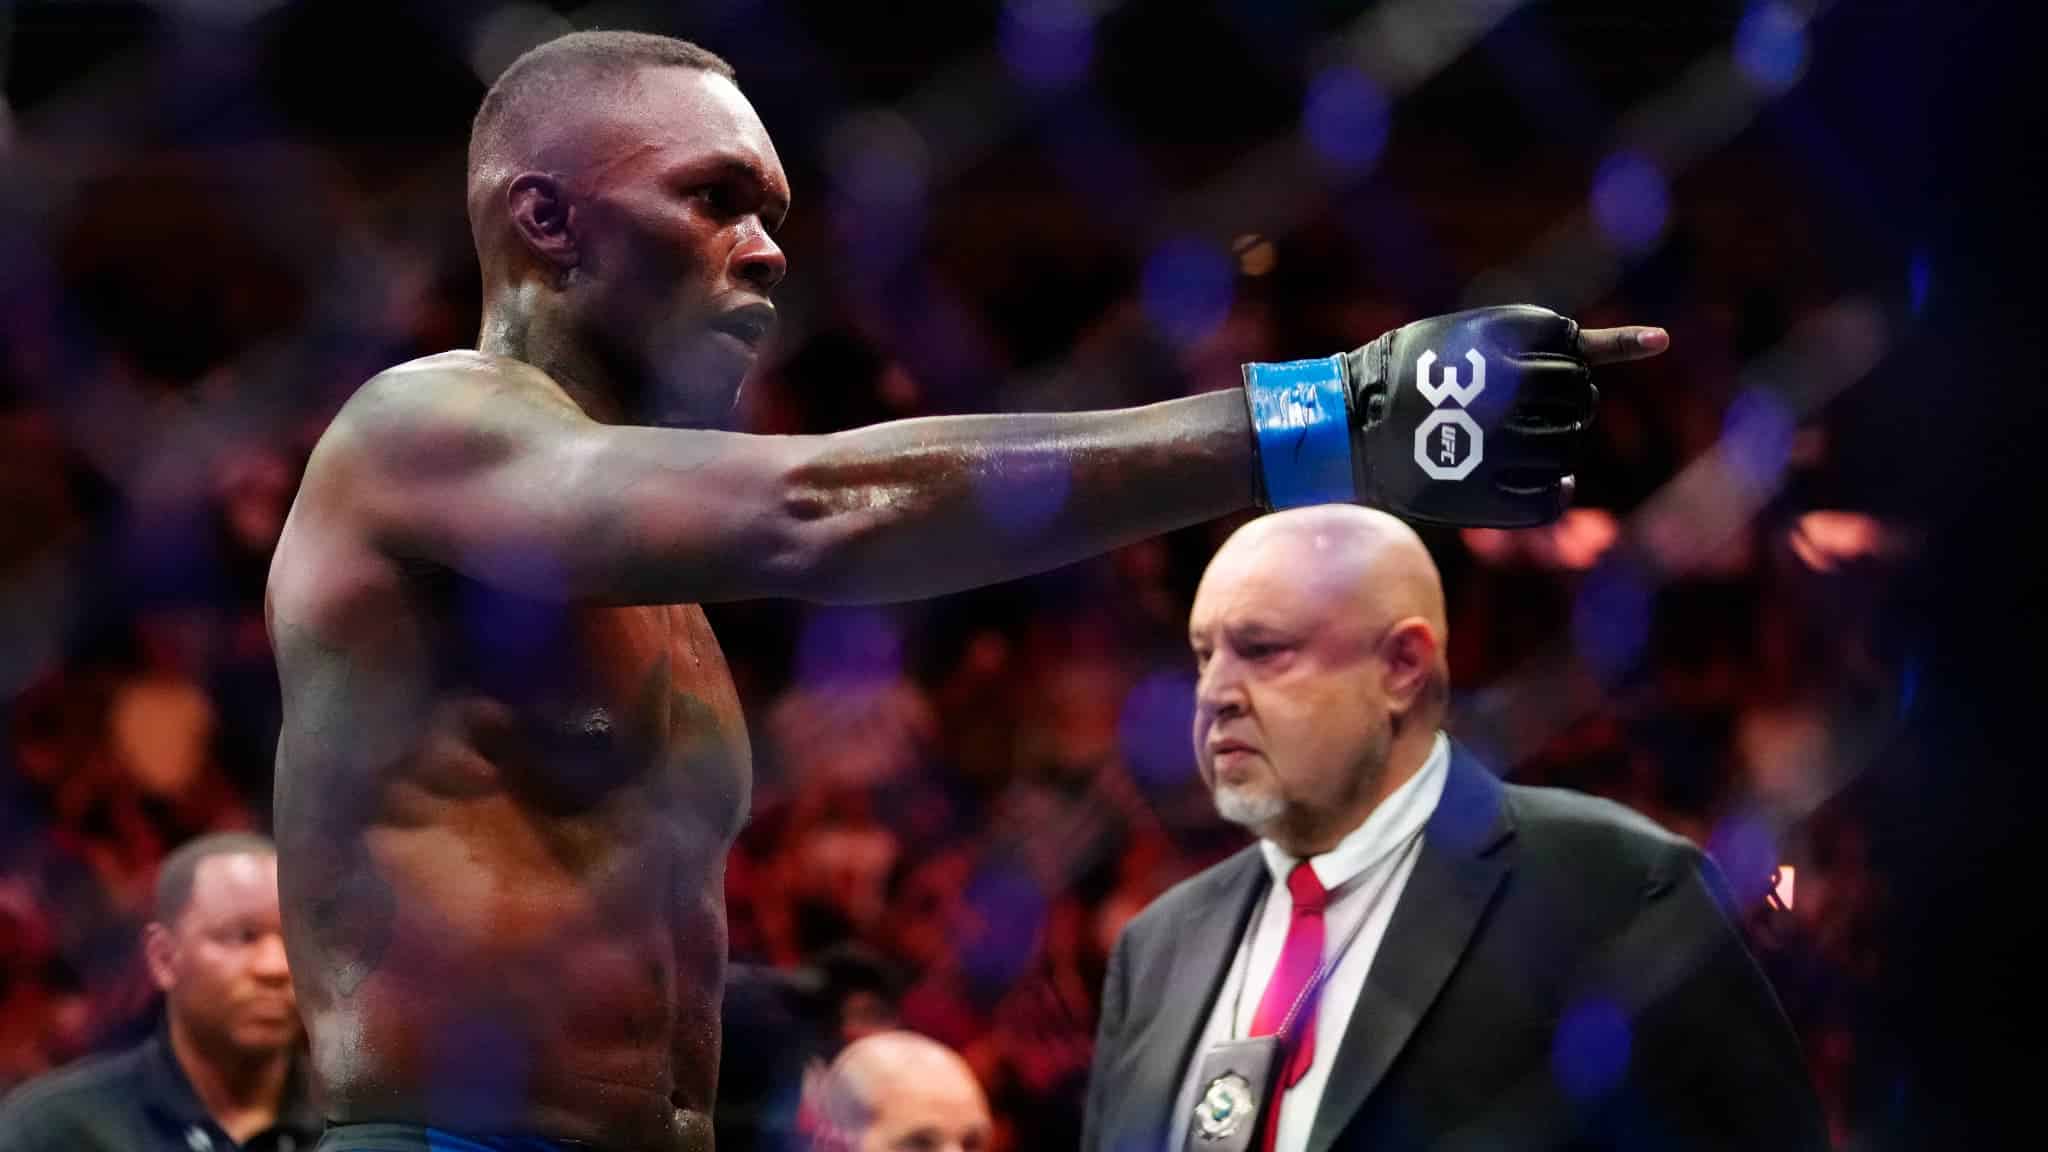 UFC Vegas 74 : En rage, Israel Adesanya s’en prend violemment aux juges